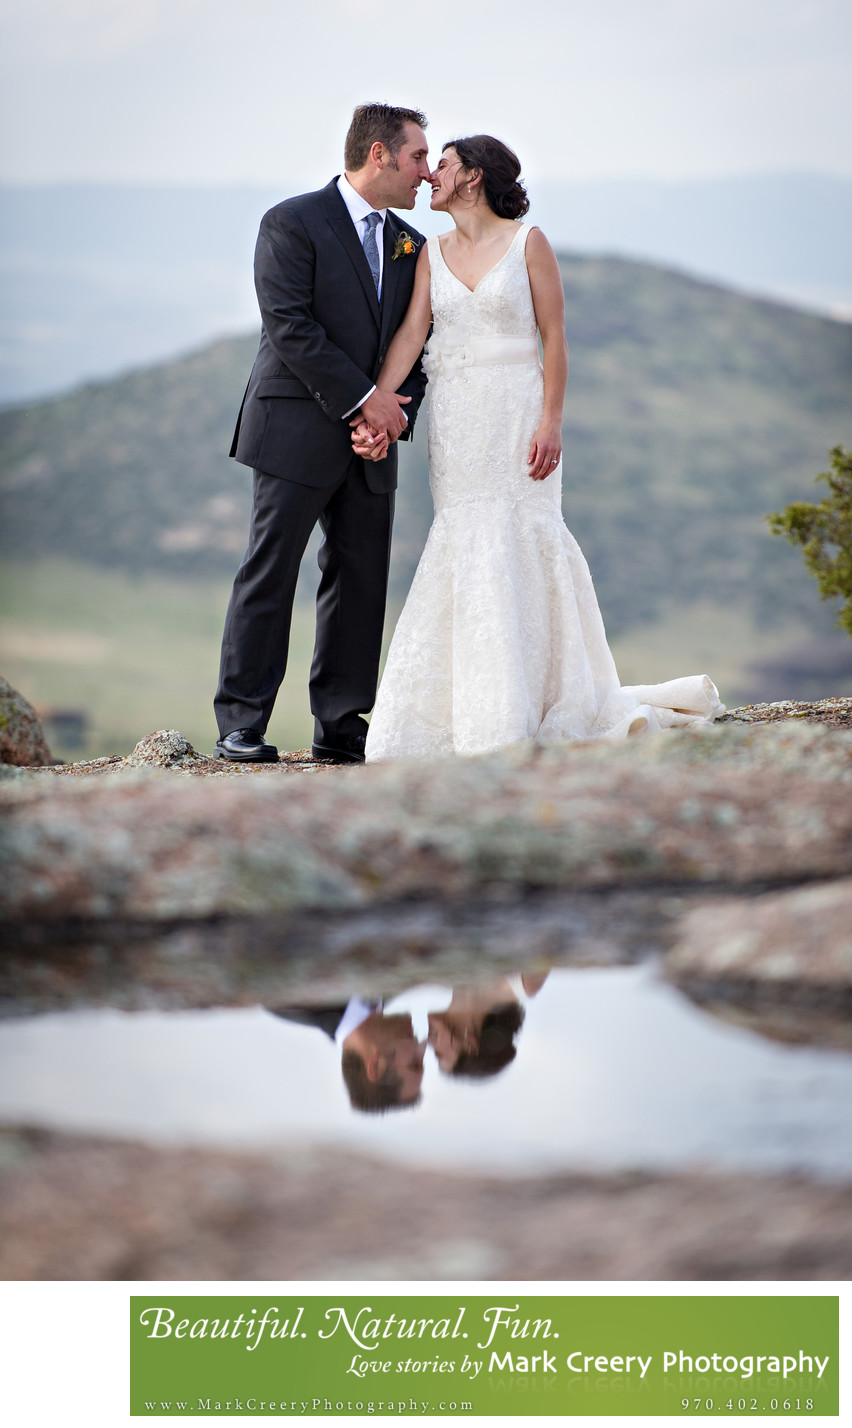 Outdoor wedding photographer in Colorado